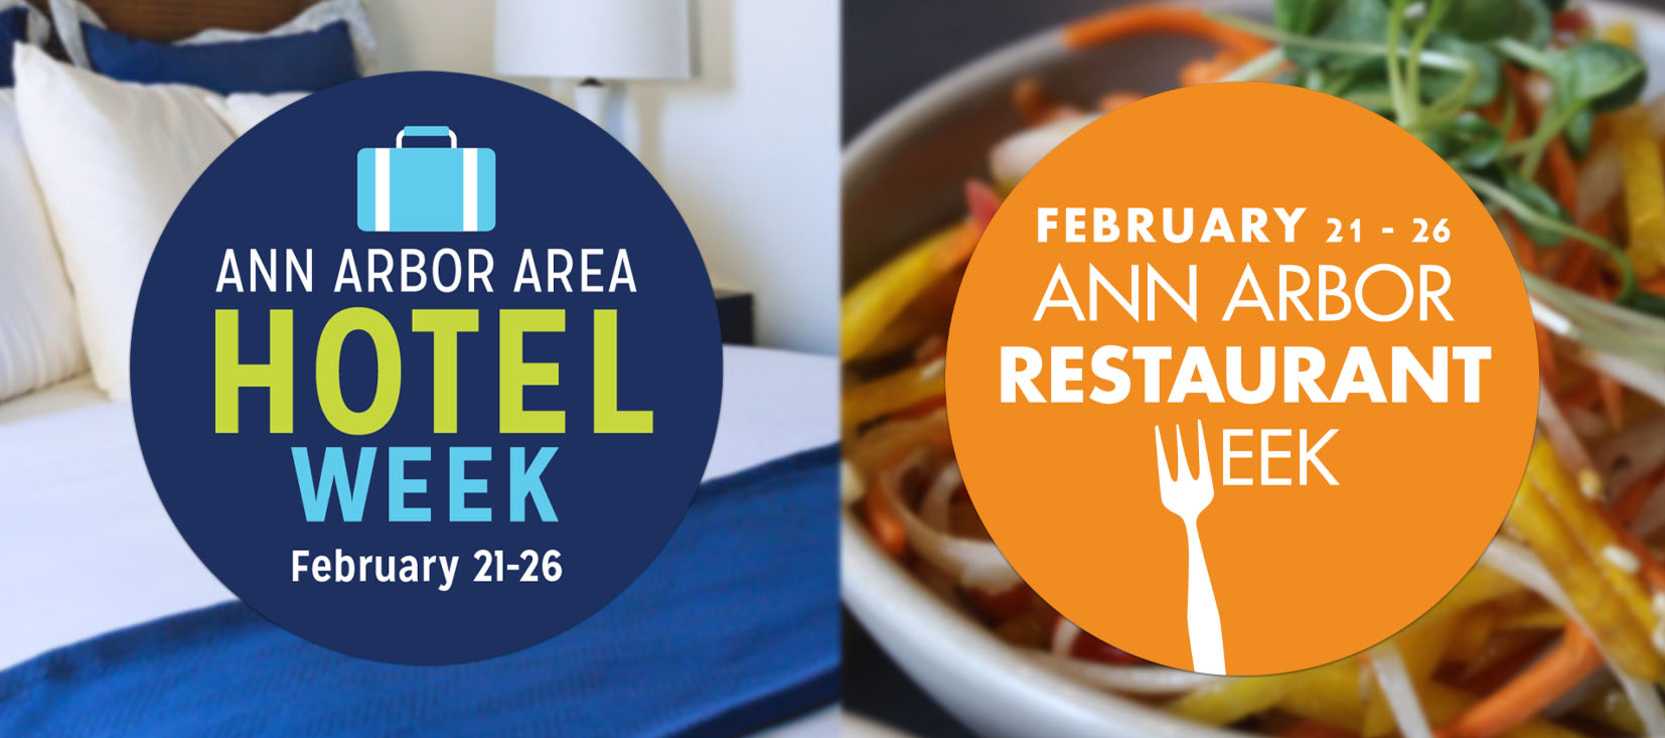 Ann Arbor Area Hotel Week Restaurant Week 2021